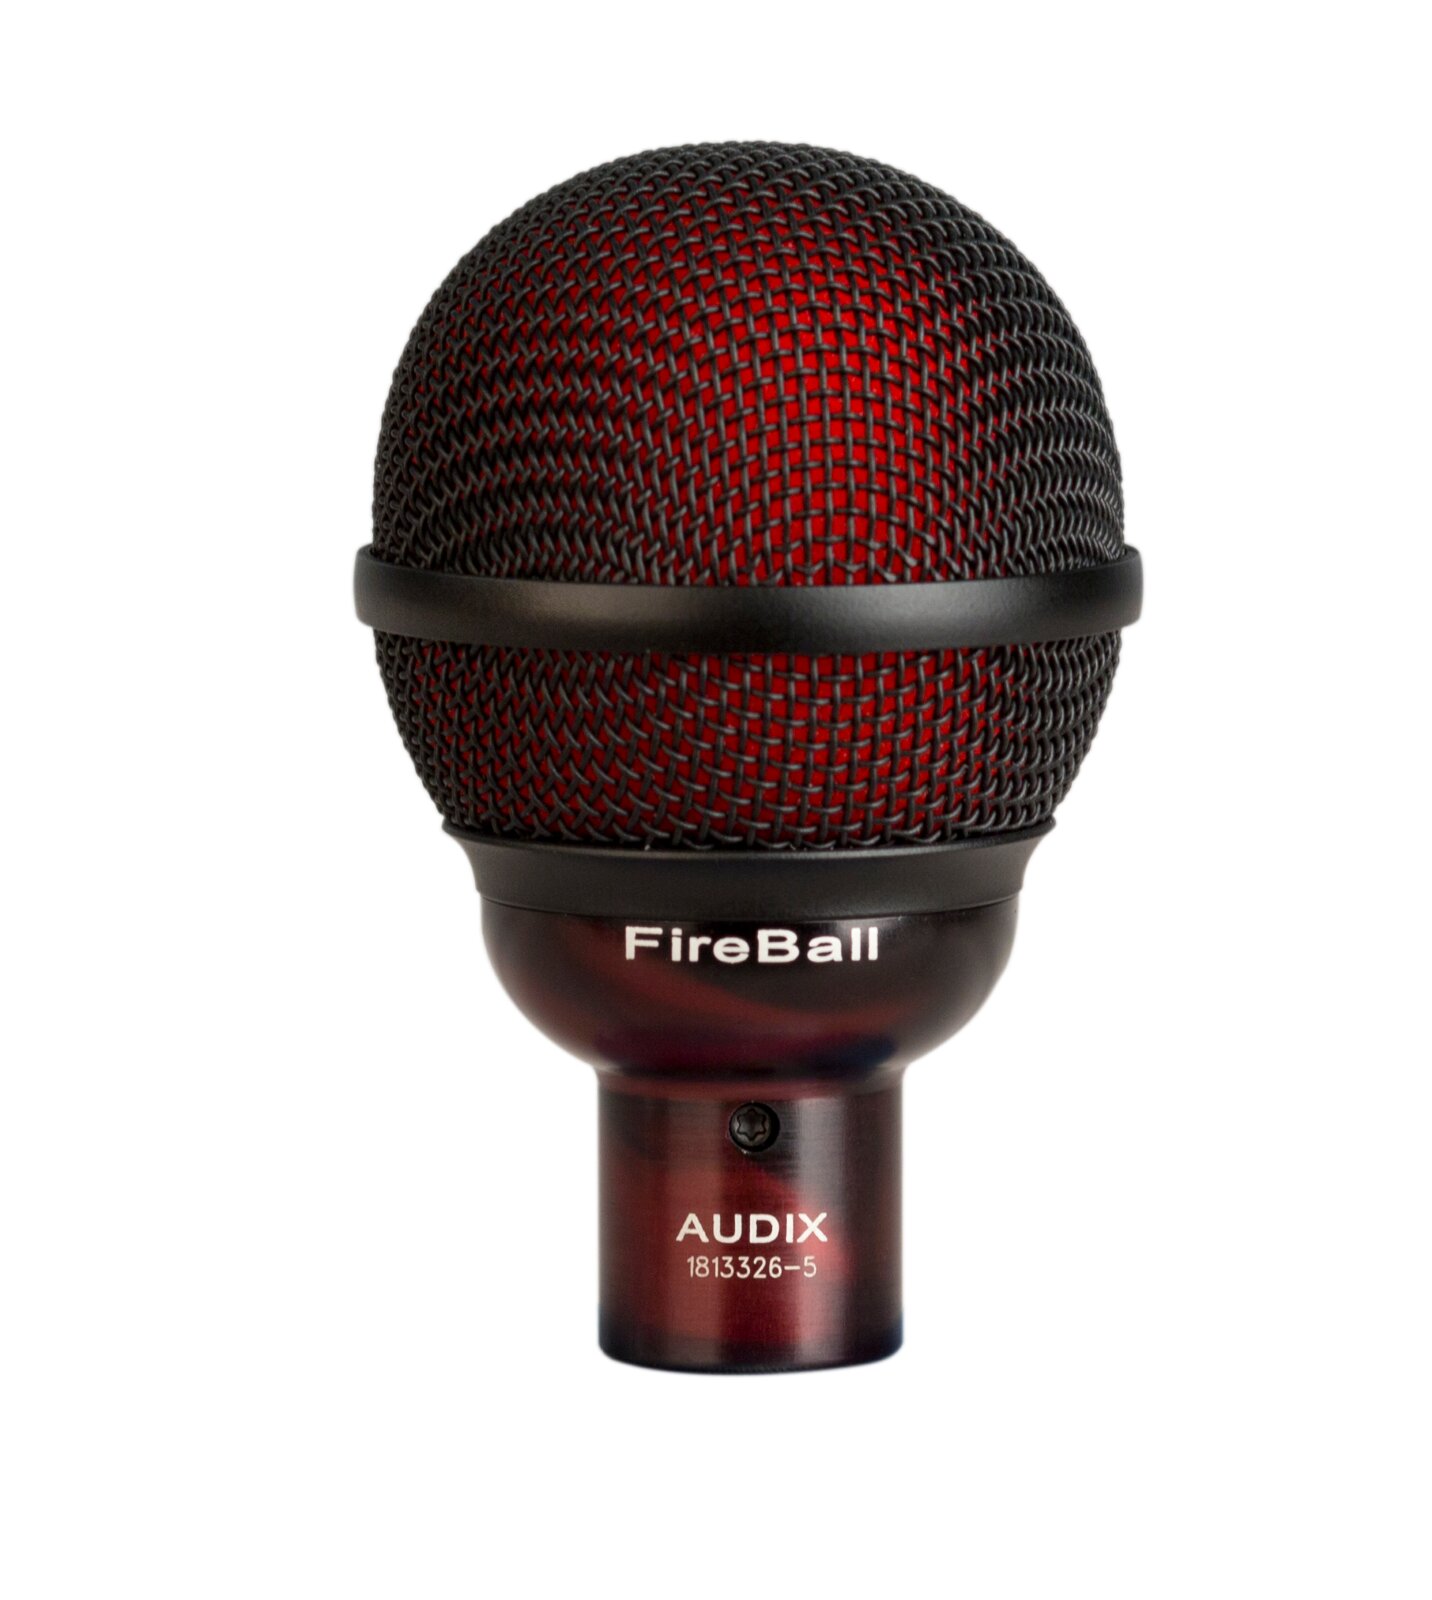 Audix FireBall Dynamic / Harmonica : photo 1